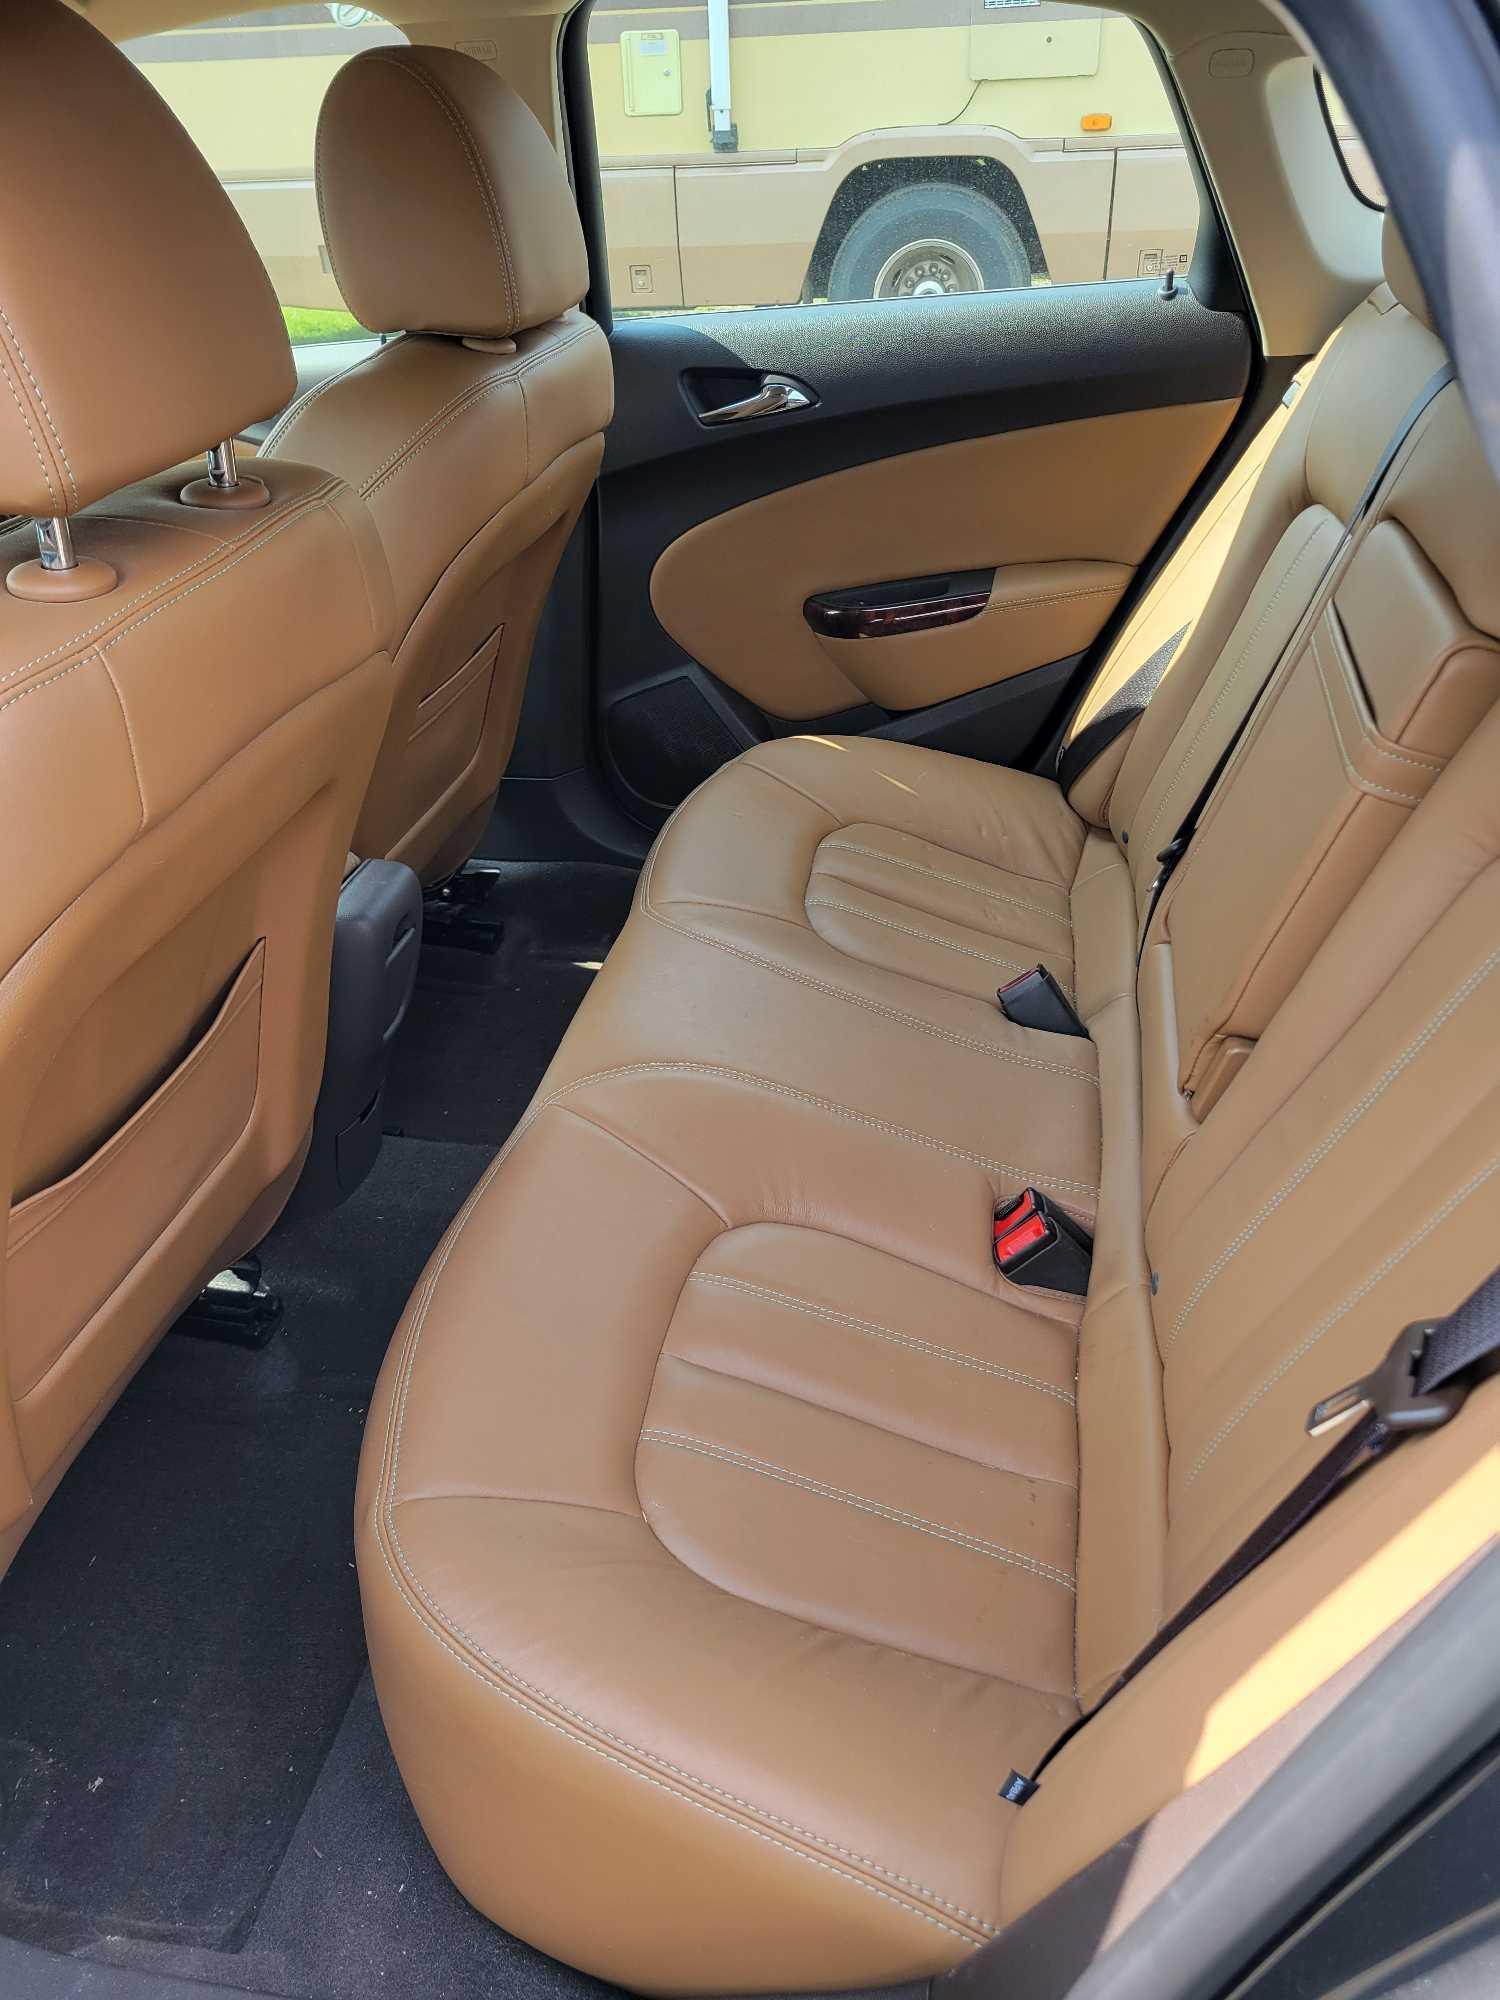 2014 Buick Verano, Runs Good, Leather Interior, 25,426miles